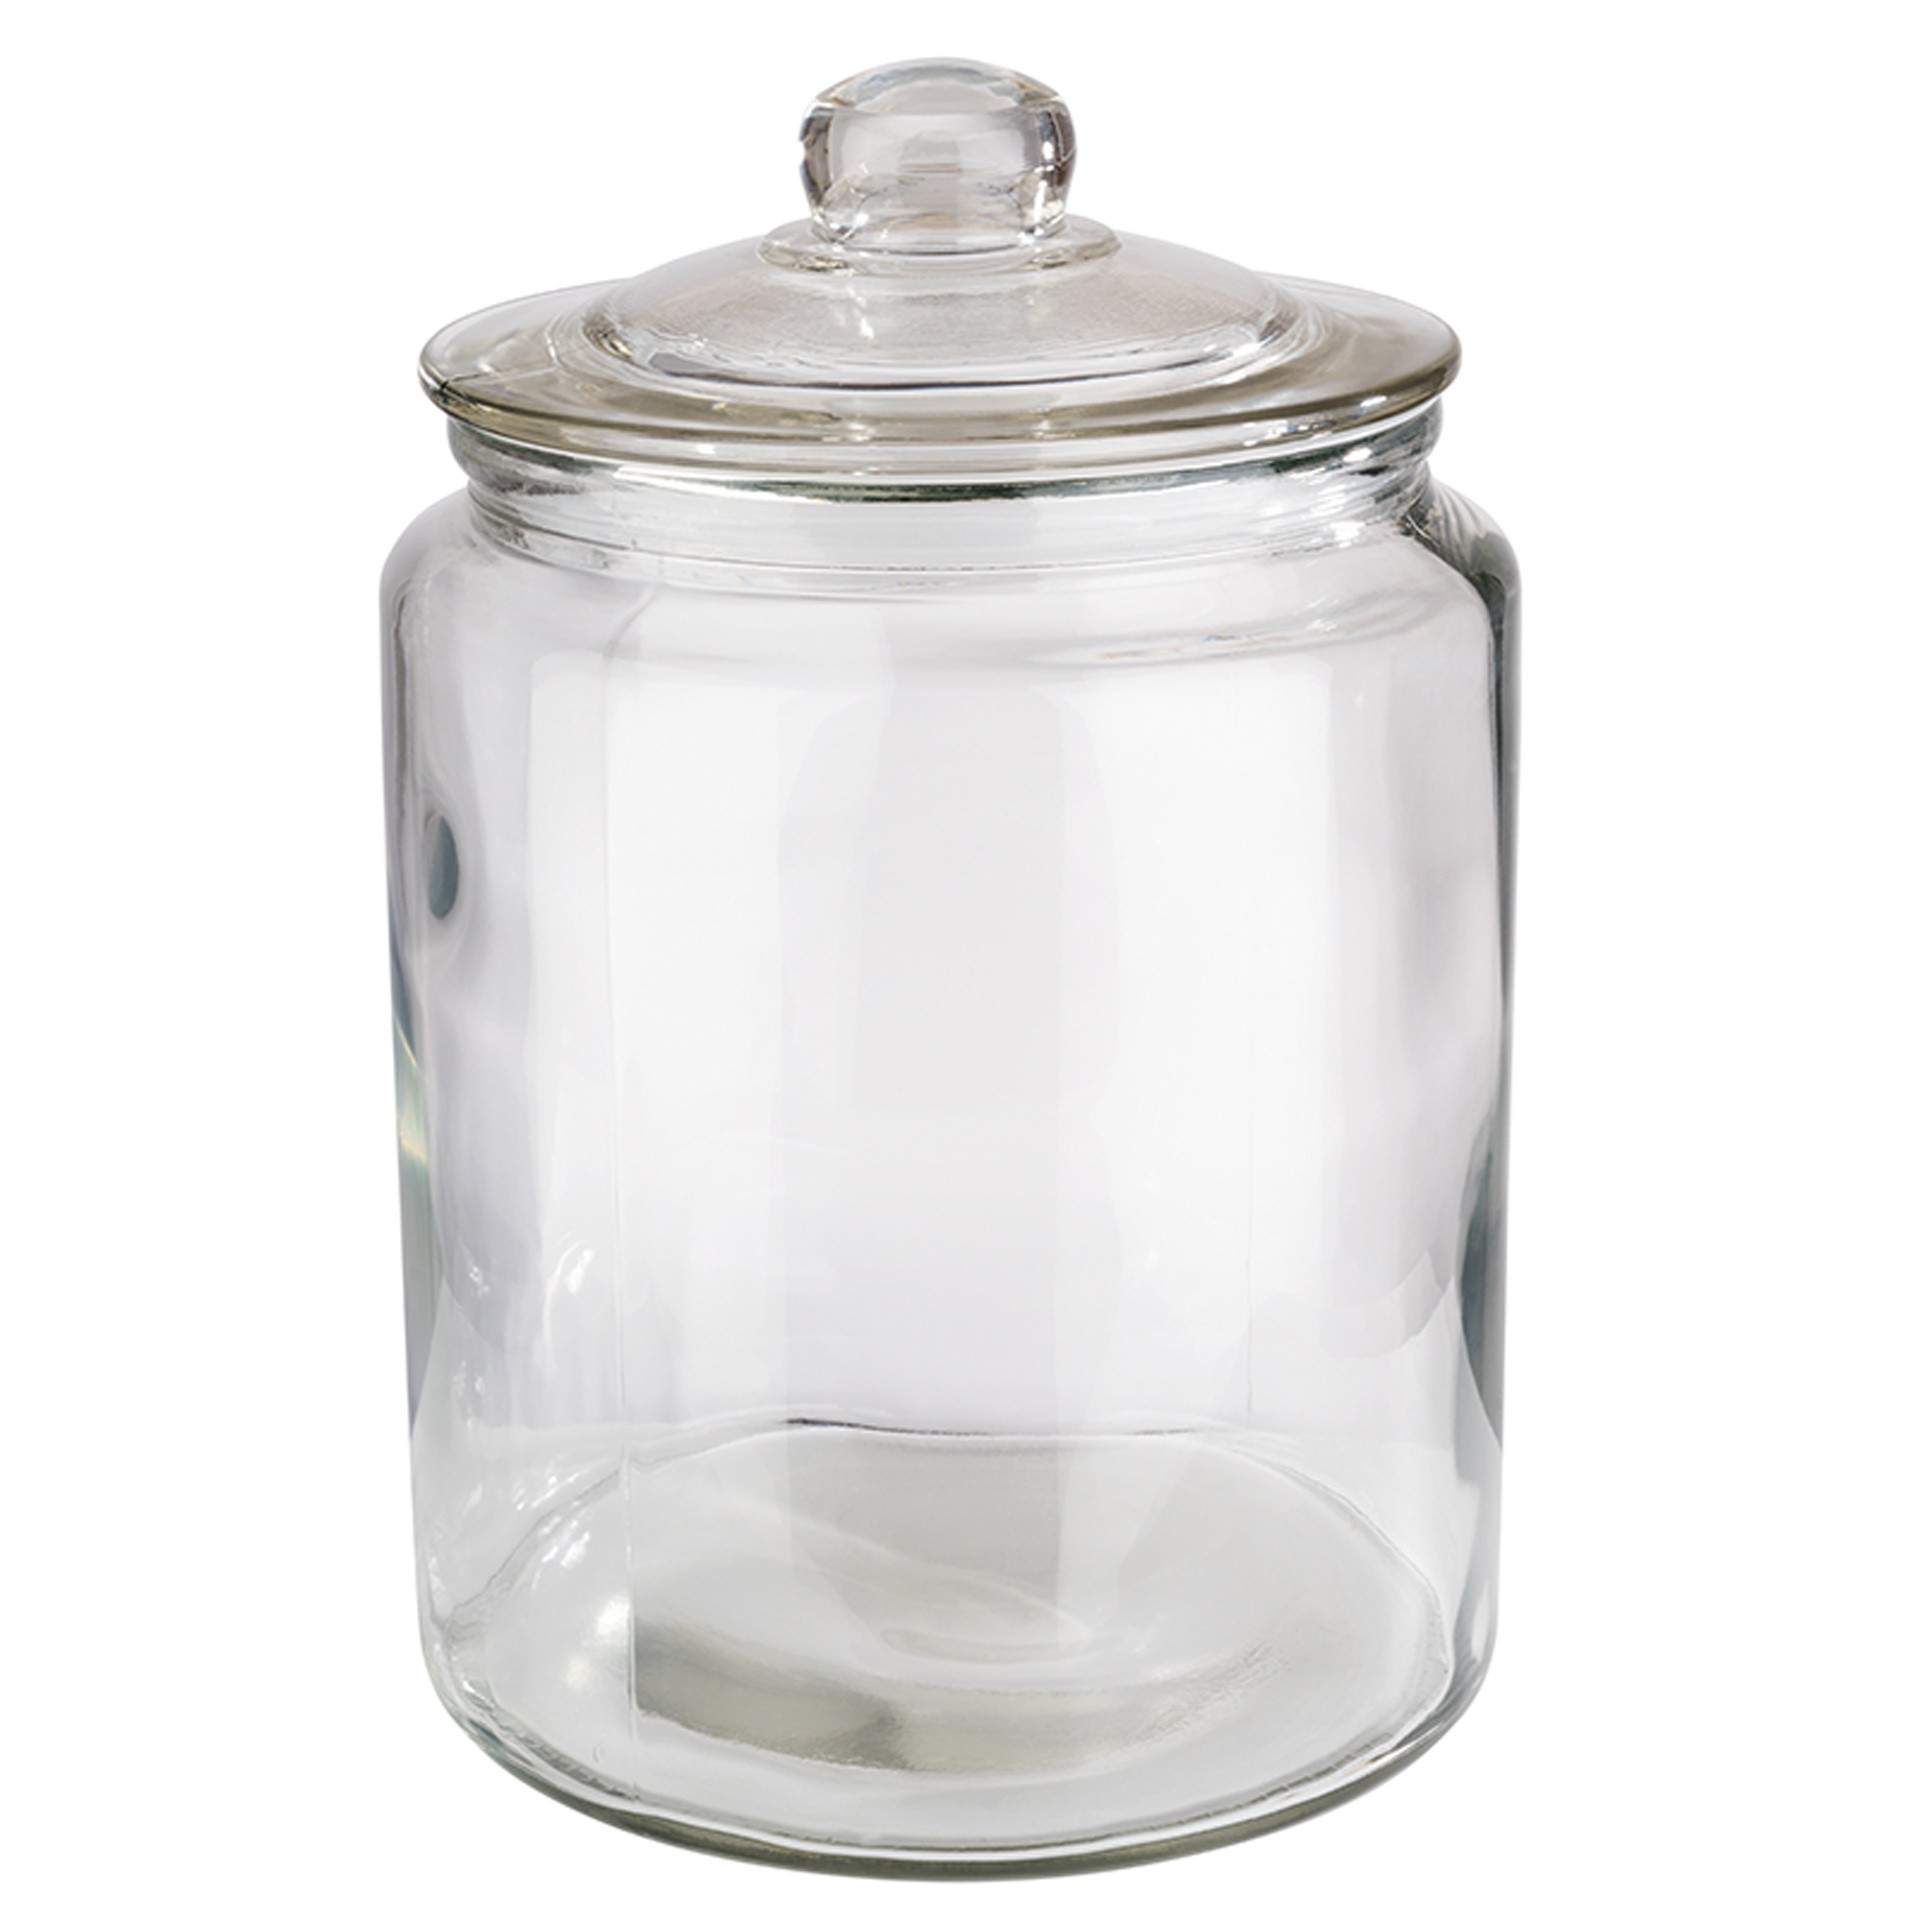 Vorratsglas - transparent - rund - Abm. 30 cm - Ø 20,0 cm - Inhalt 6,0 l - Glas - 82253-B